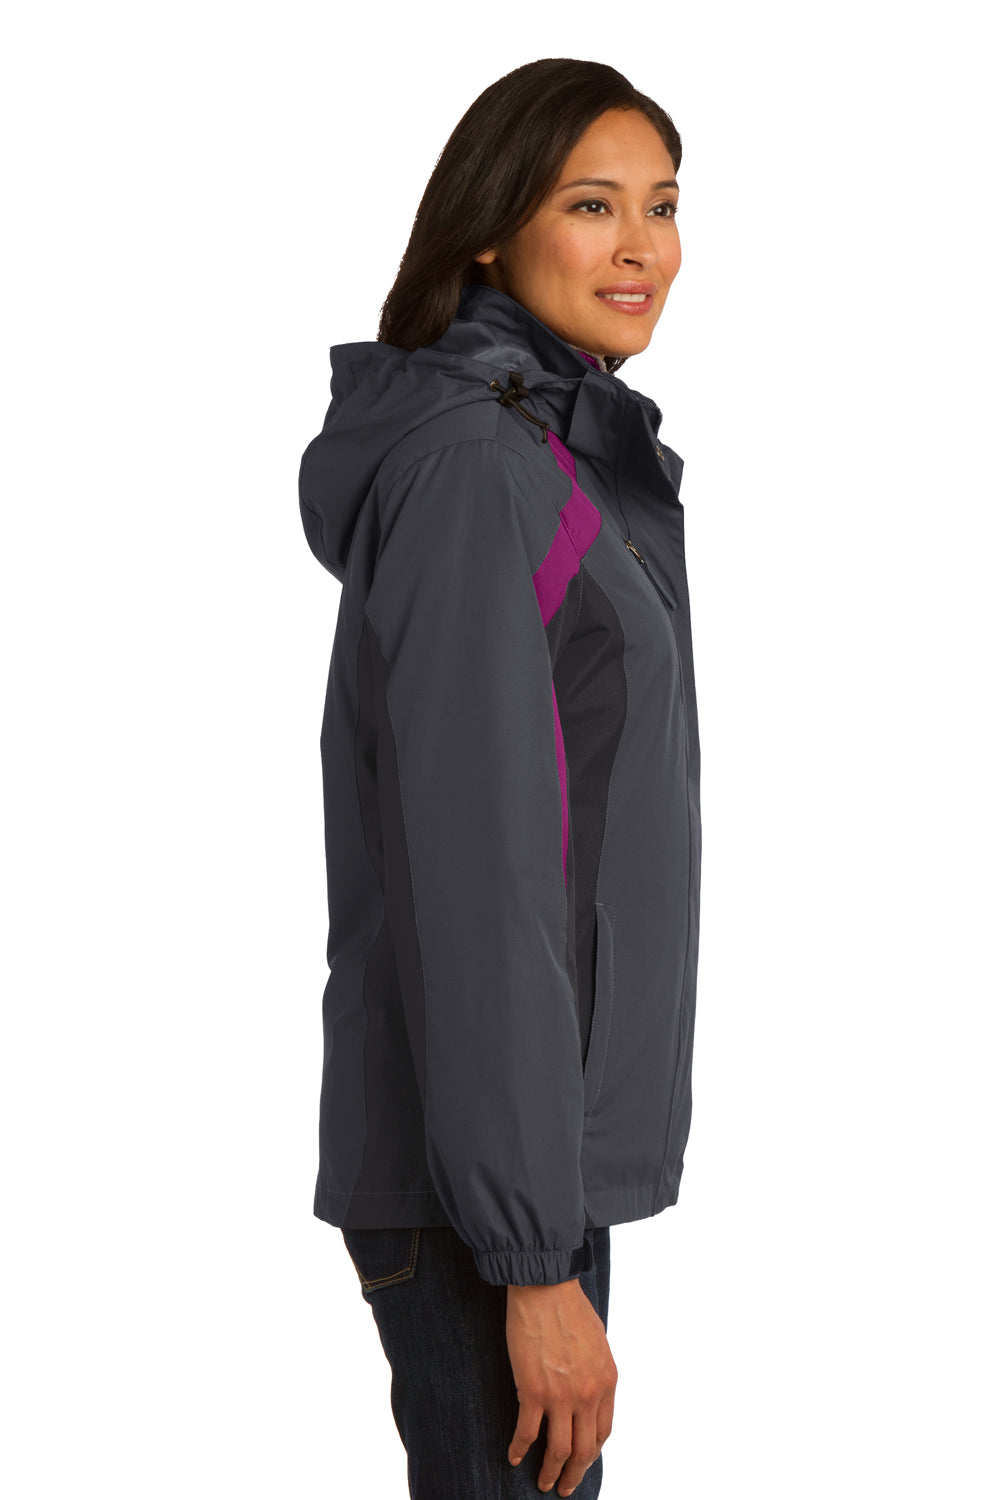 Port Authority L321 Womens 3-in-1 Wind & Water Resistant Full Zip Hooded Jacket Grey/Black/Berry Purple Side